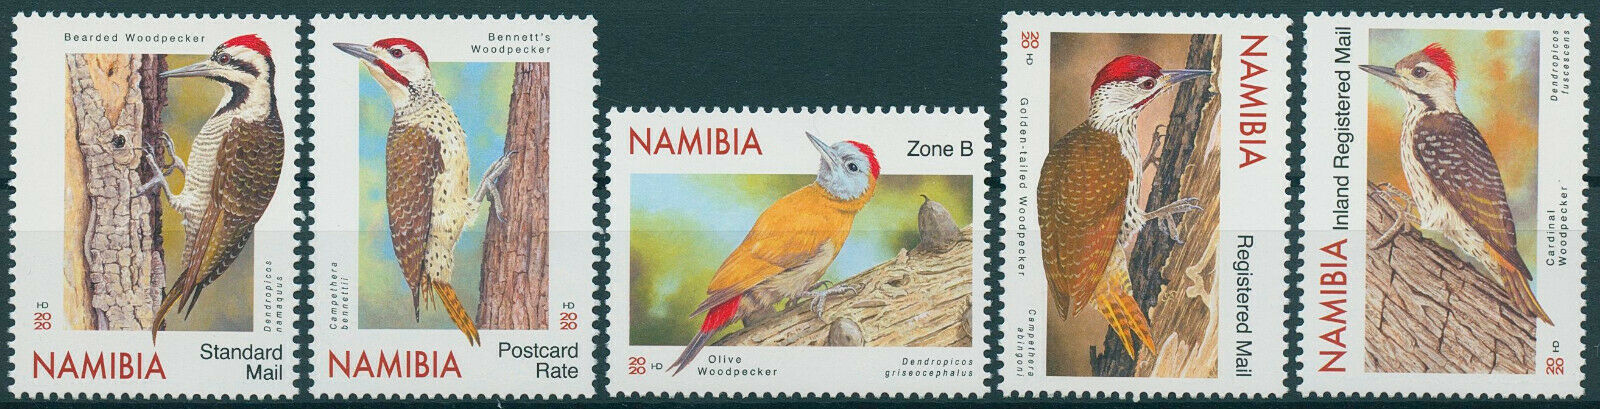 Namibia 2020 MNH Birds on Stamps Woodpeckers Cardinal Woodpecker 5v Set A